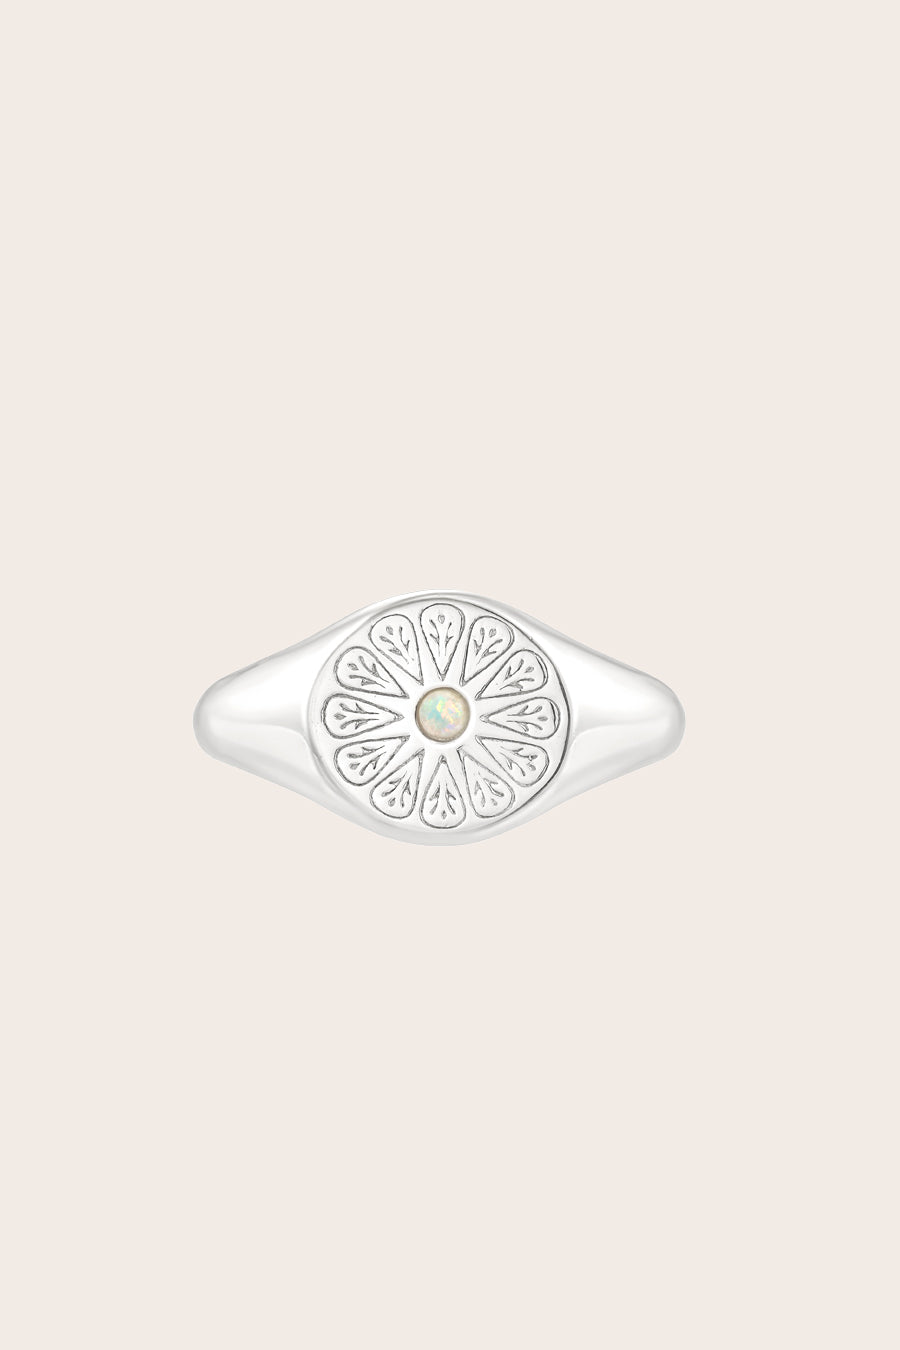 Silver Opal Birthstone Signet Ring on cream background